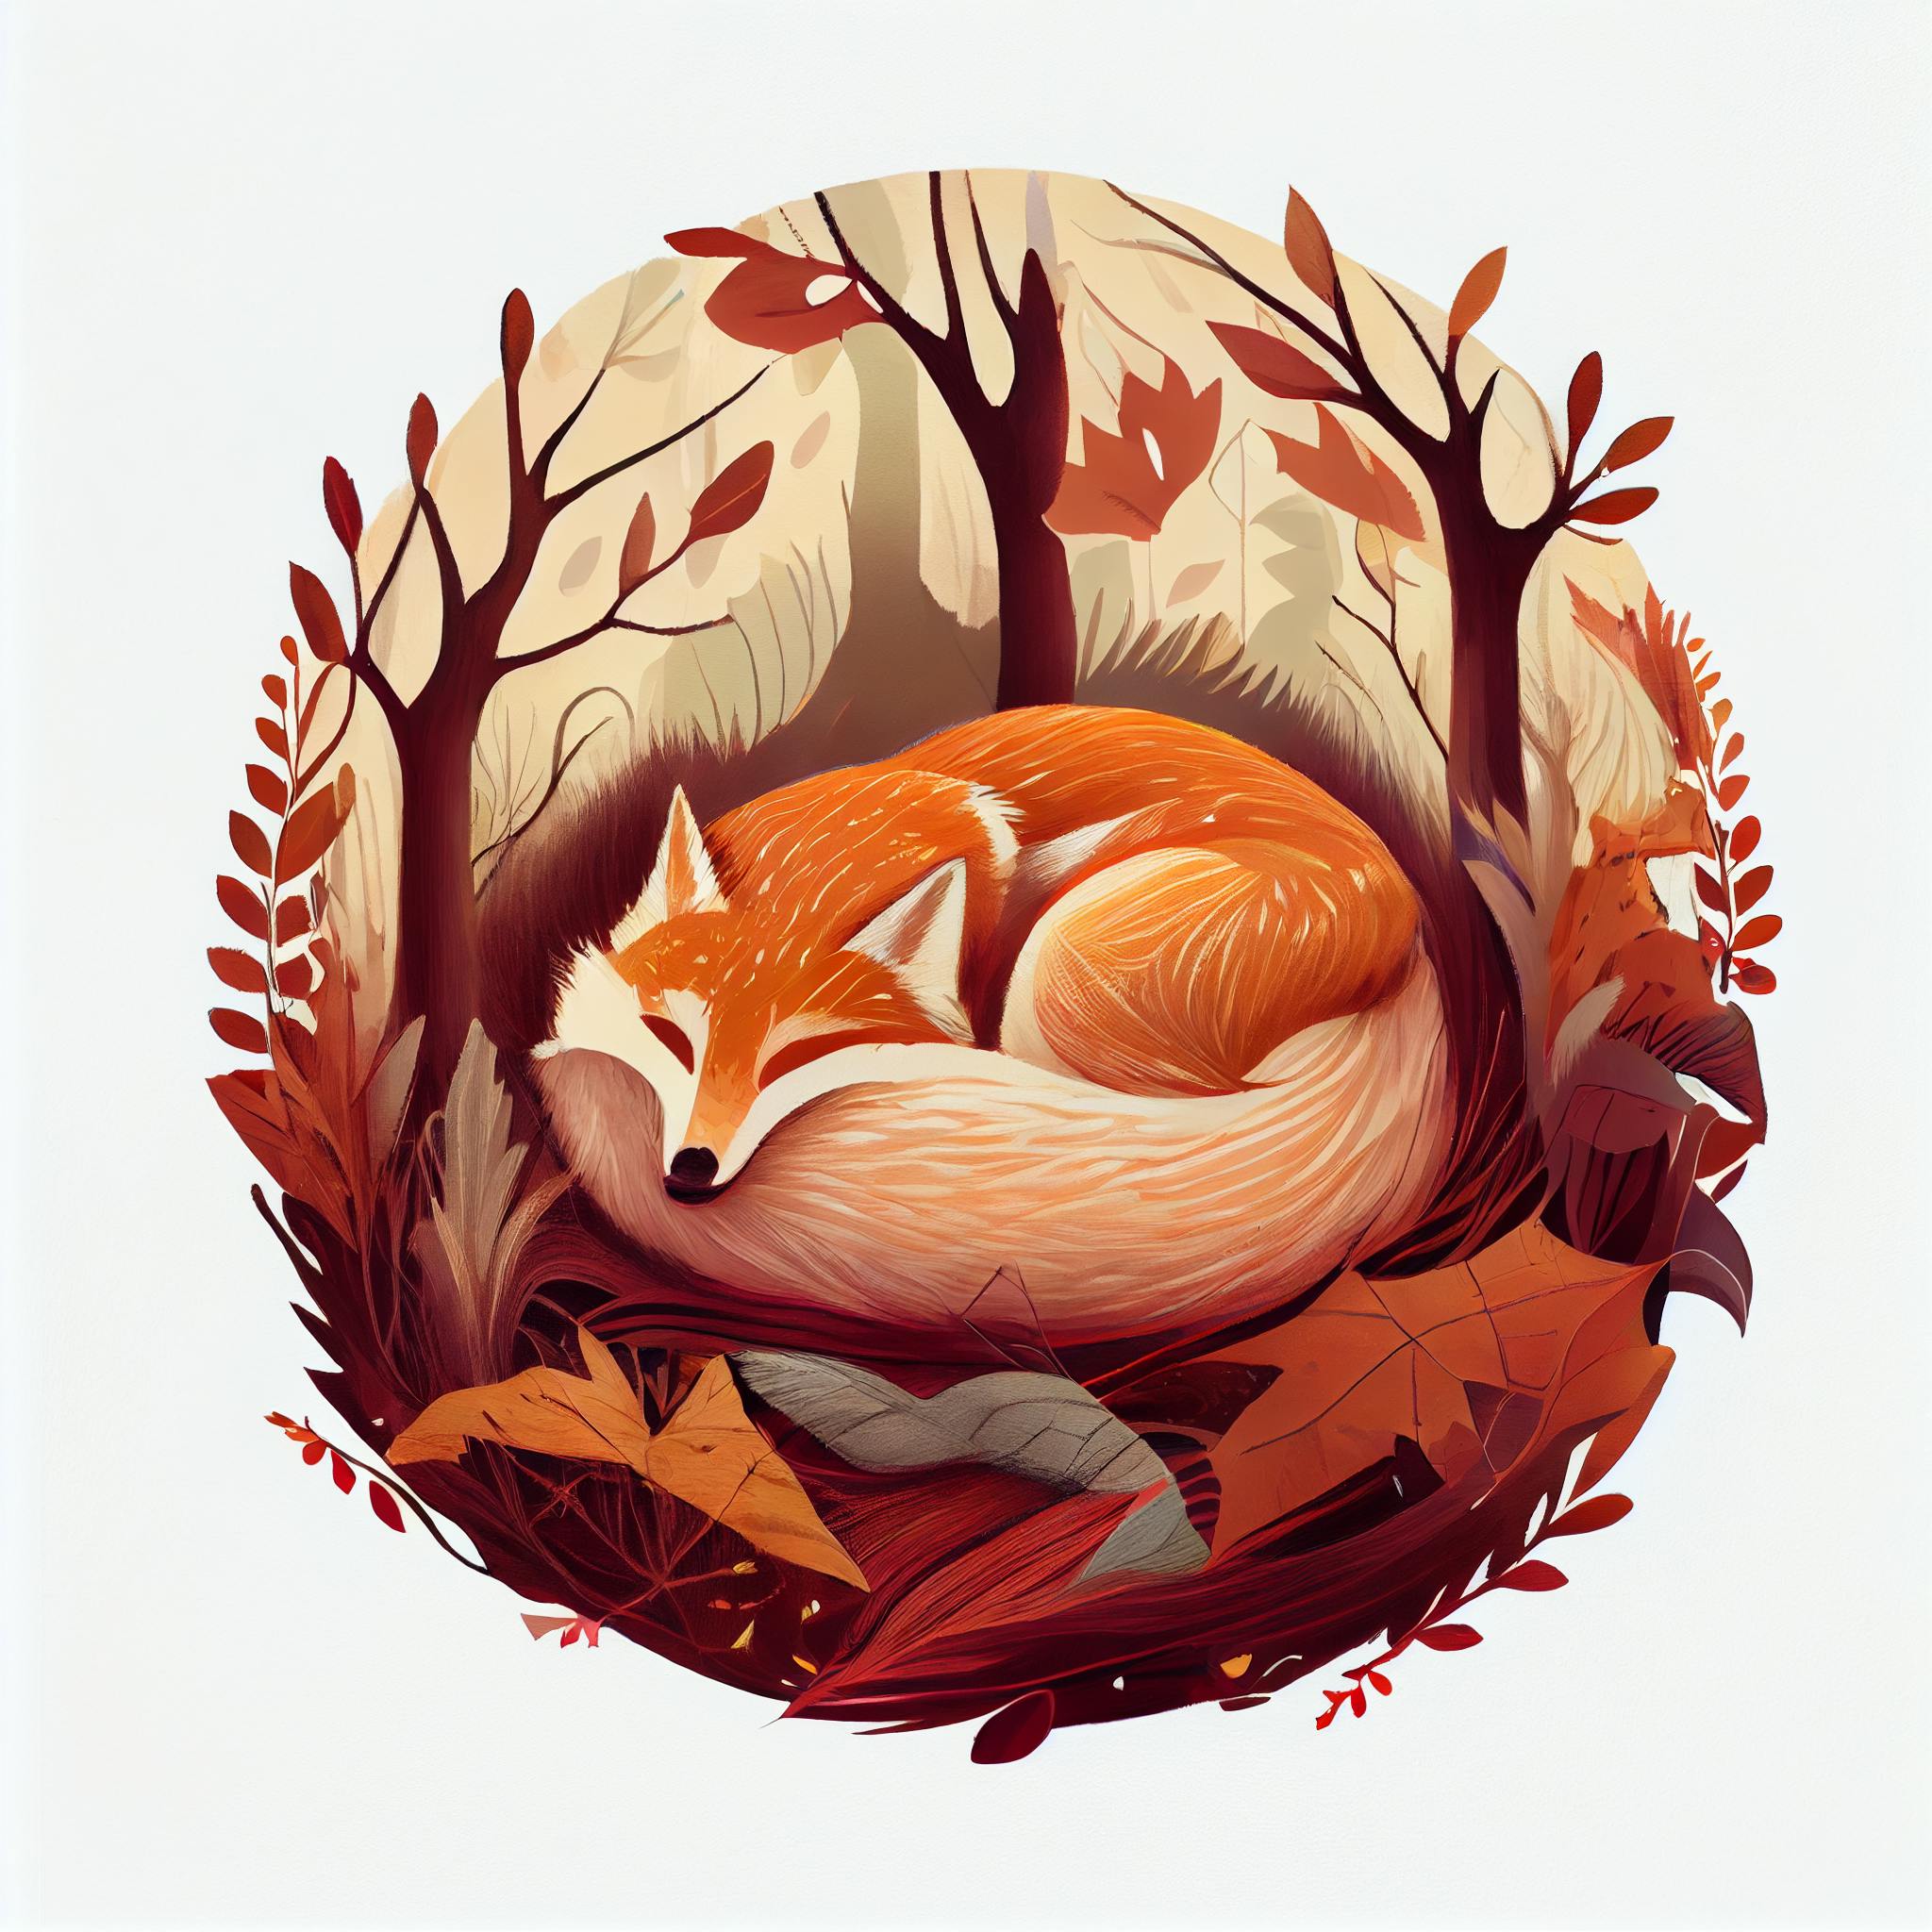 curled up, woodland, cosy, nap, fox, stylised, autumn tones